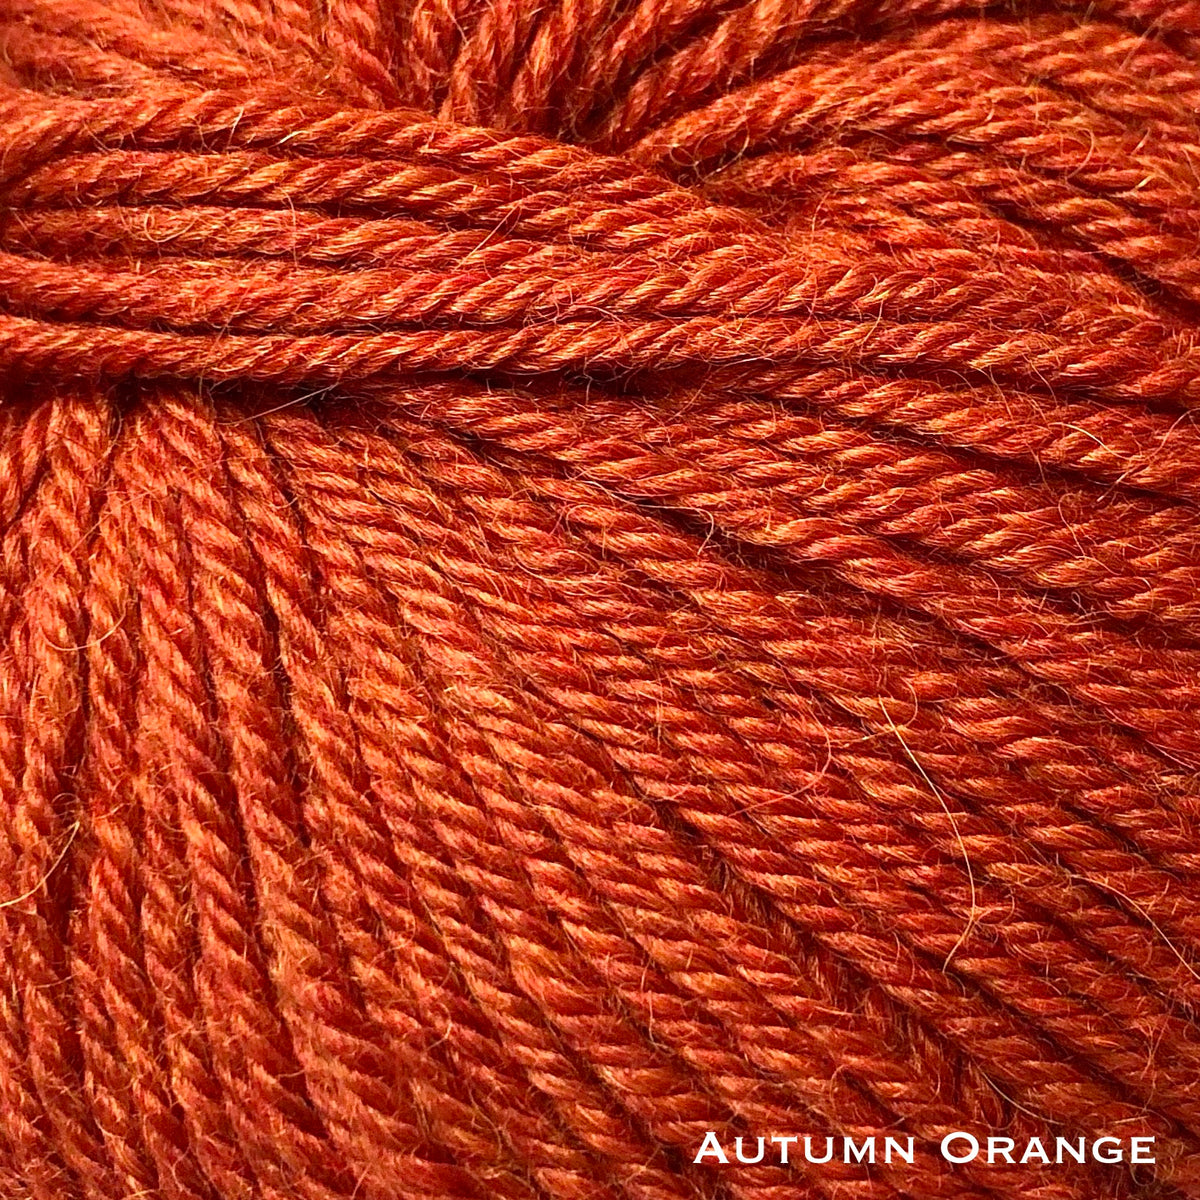 burnt orange alpaca yarn with wool